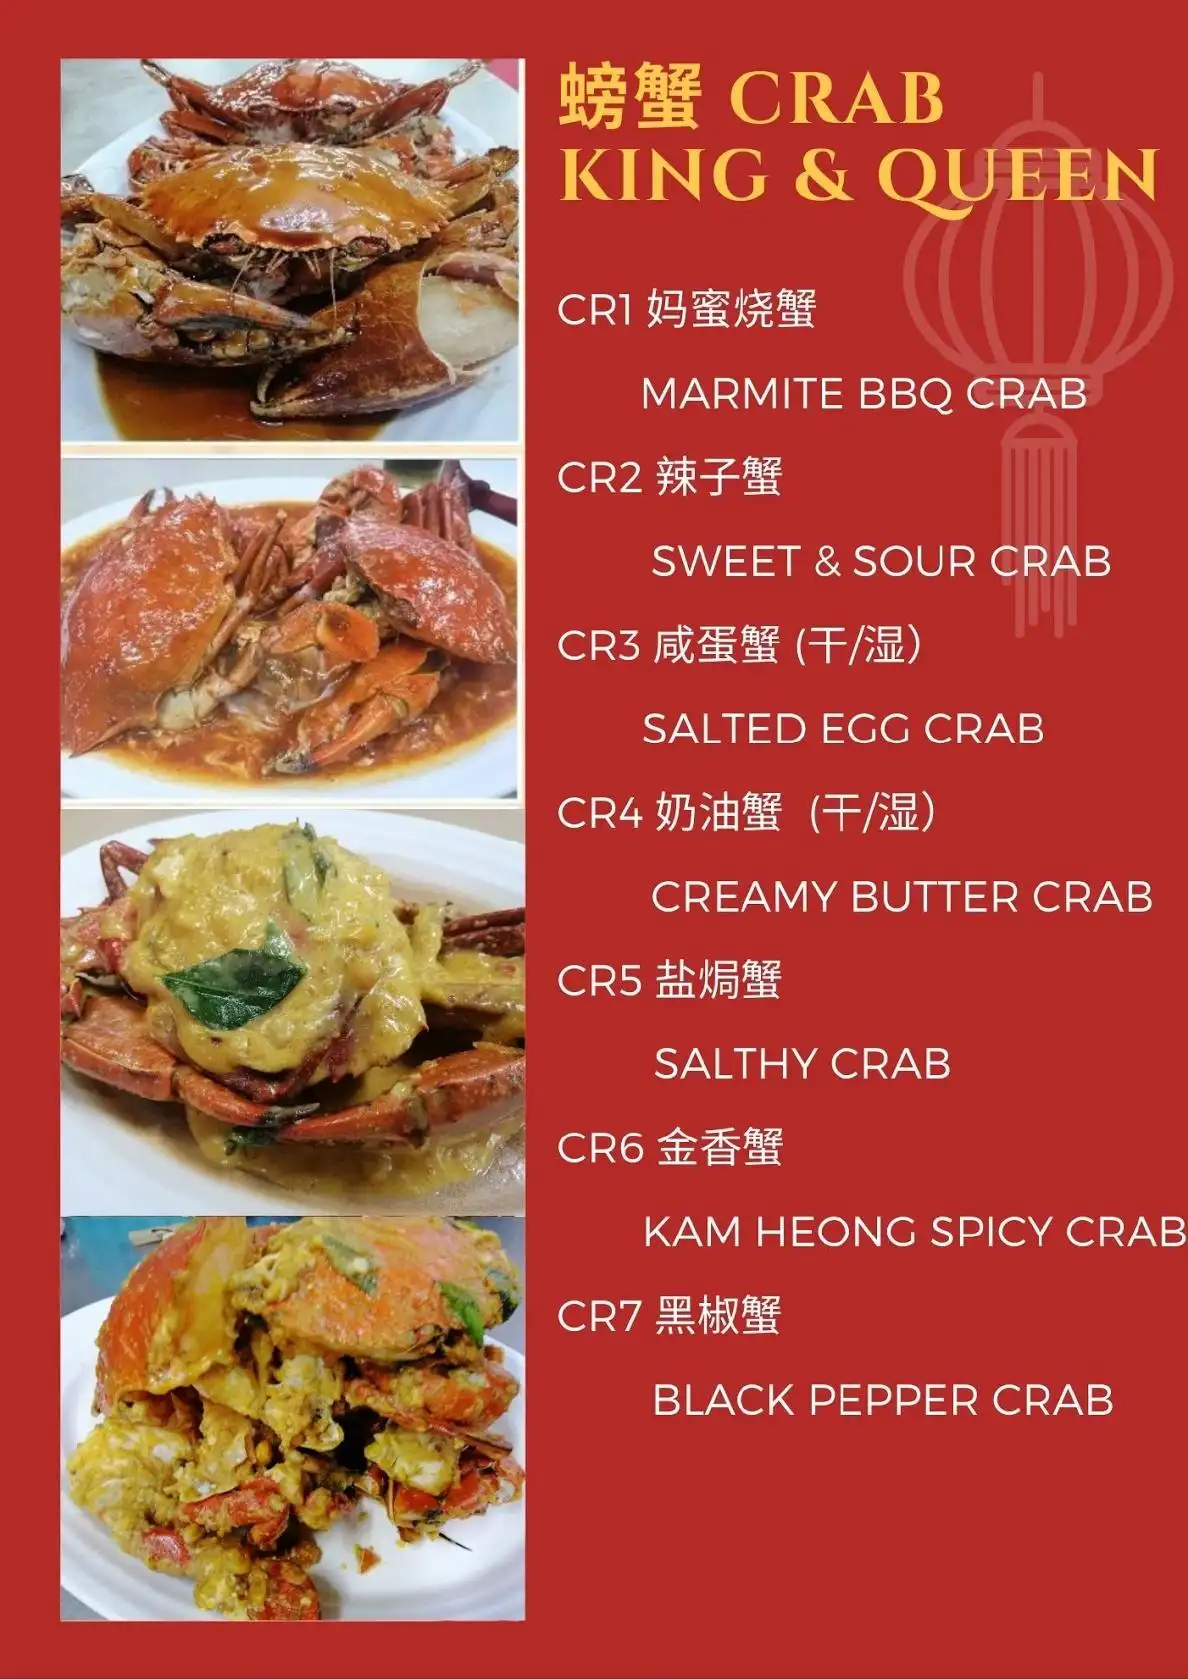 Seremban Yesoon Seafood Restaurant 芙蓉夜顺烧蟹海鲜饭店